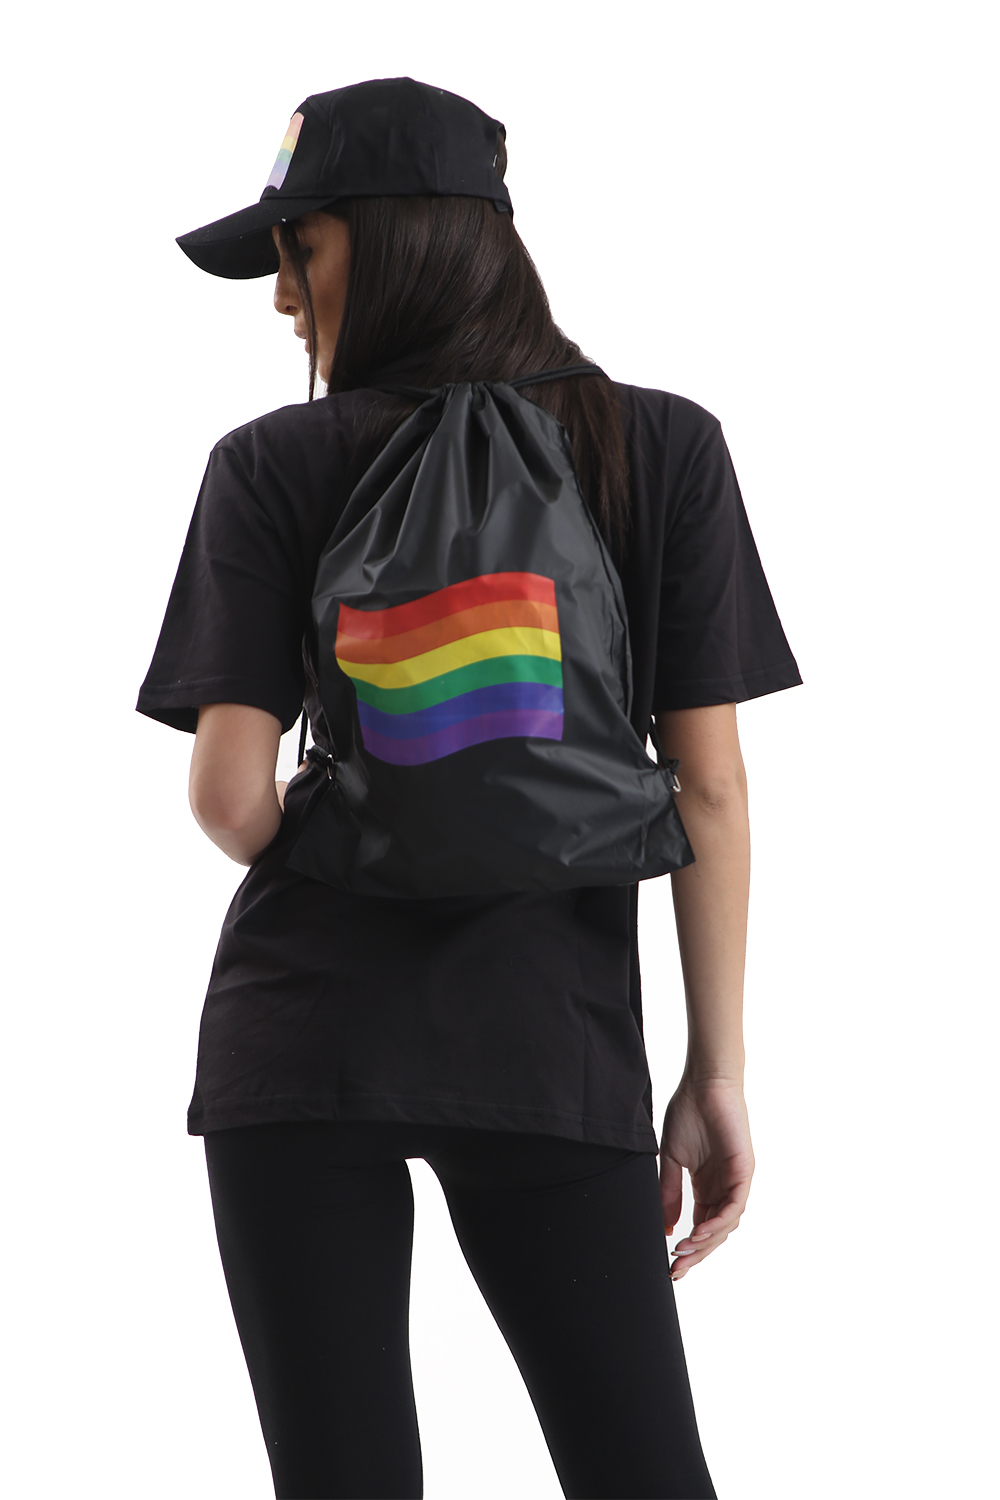 Wickedfun Rainbow Bag